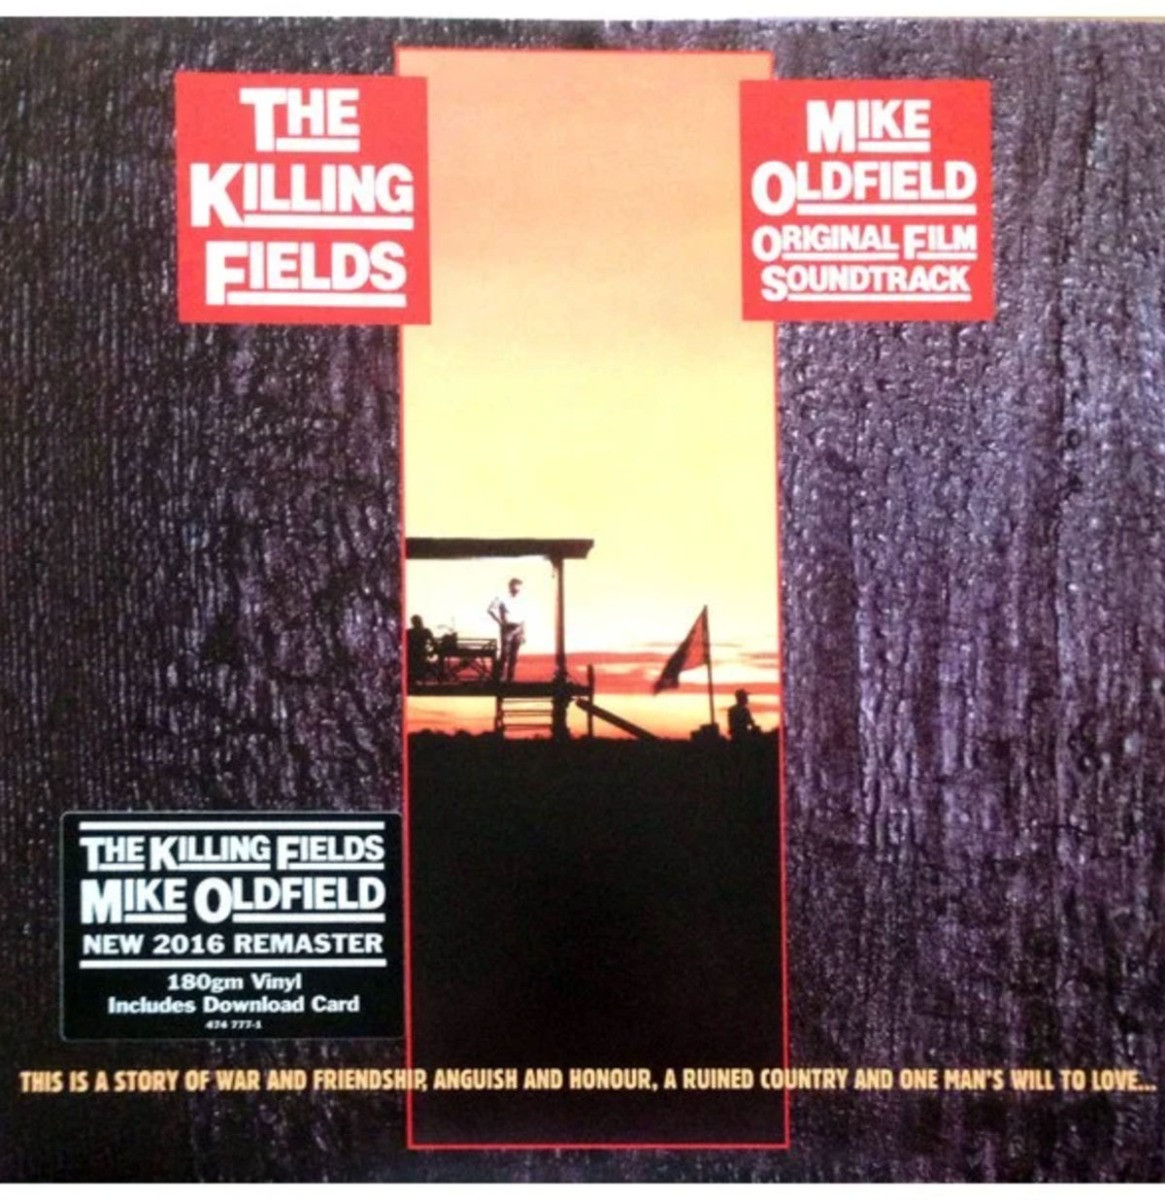 Mike Oldfield - The Killing Fields (Original Film Soundtrack) LP